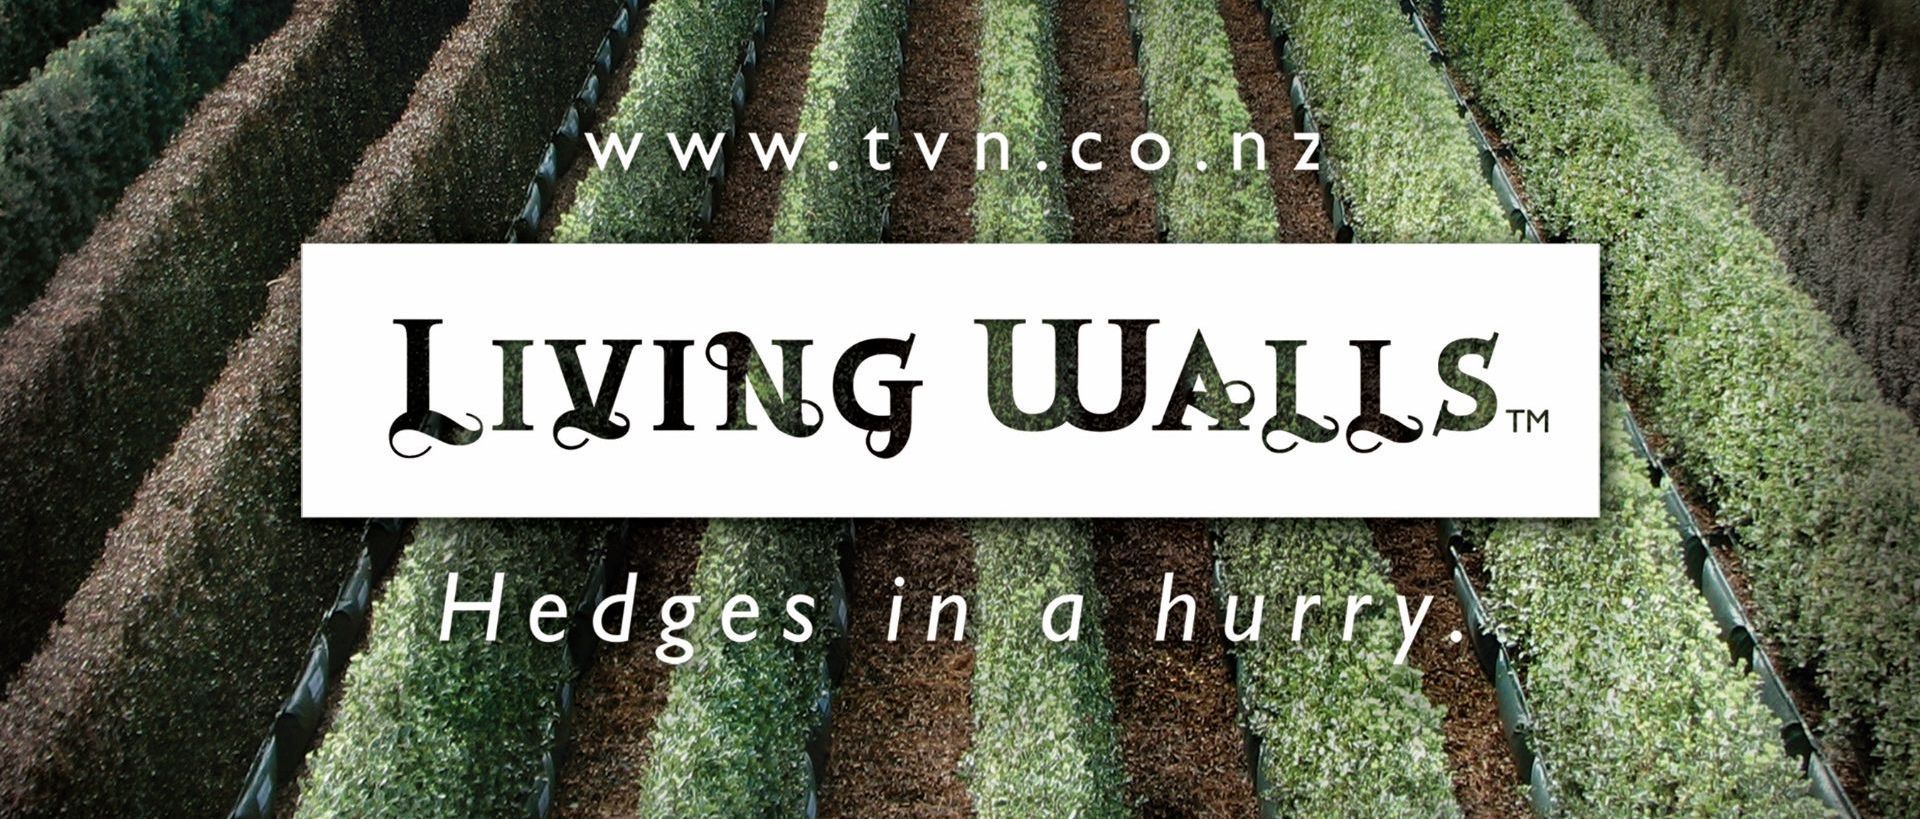 Twining Valley Nurseries Banner image